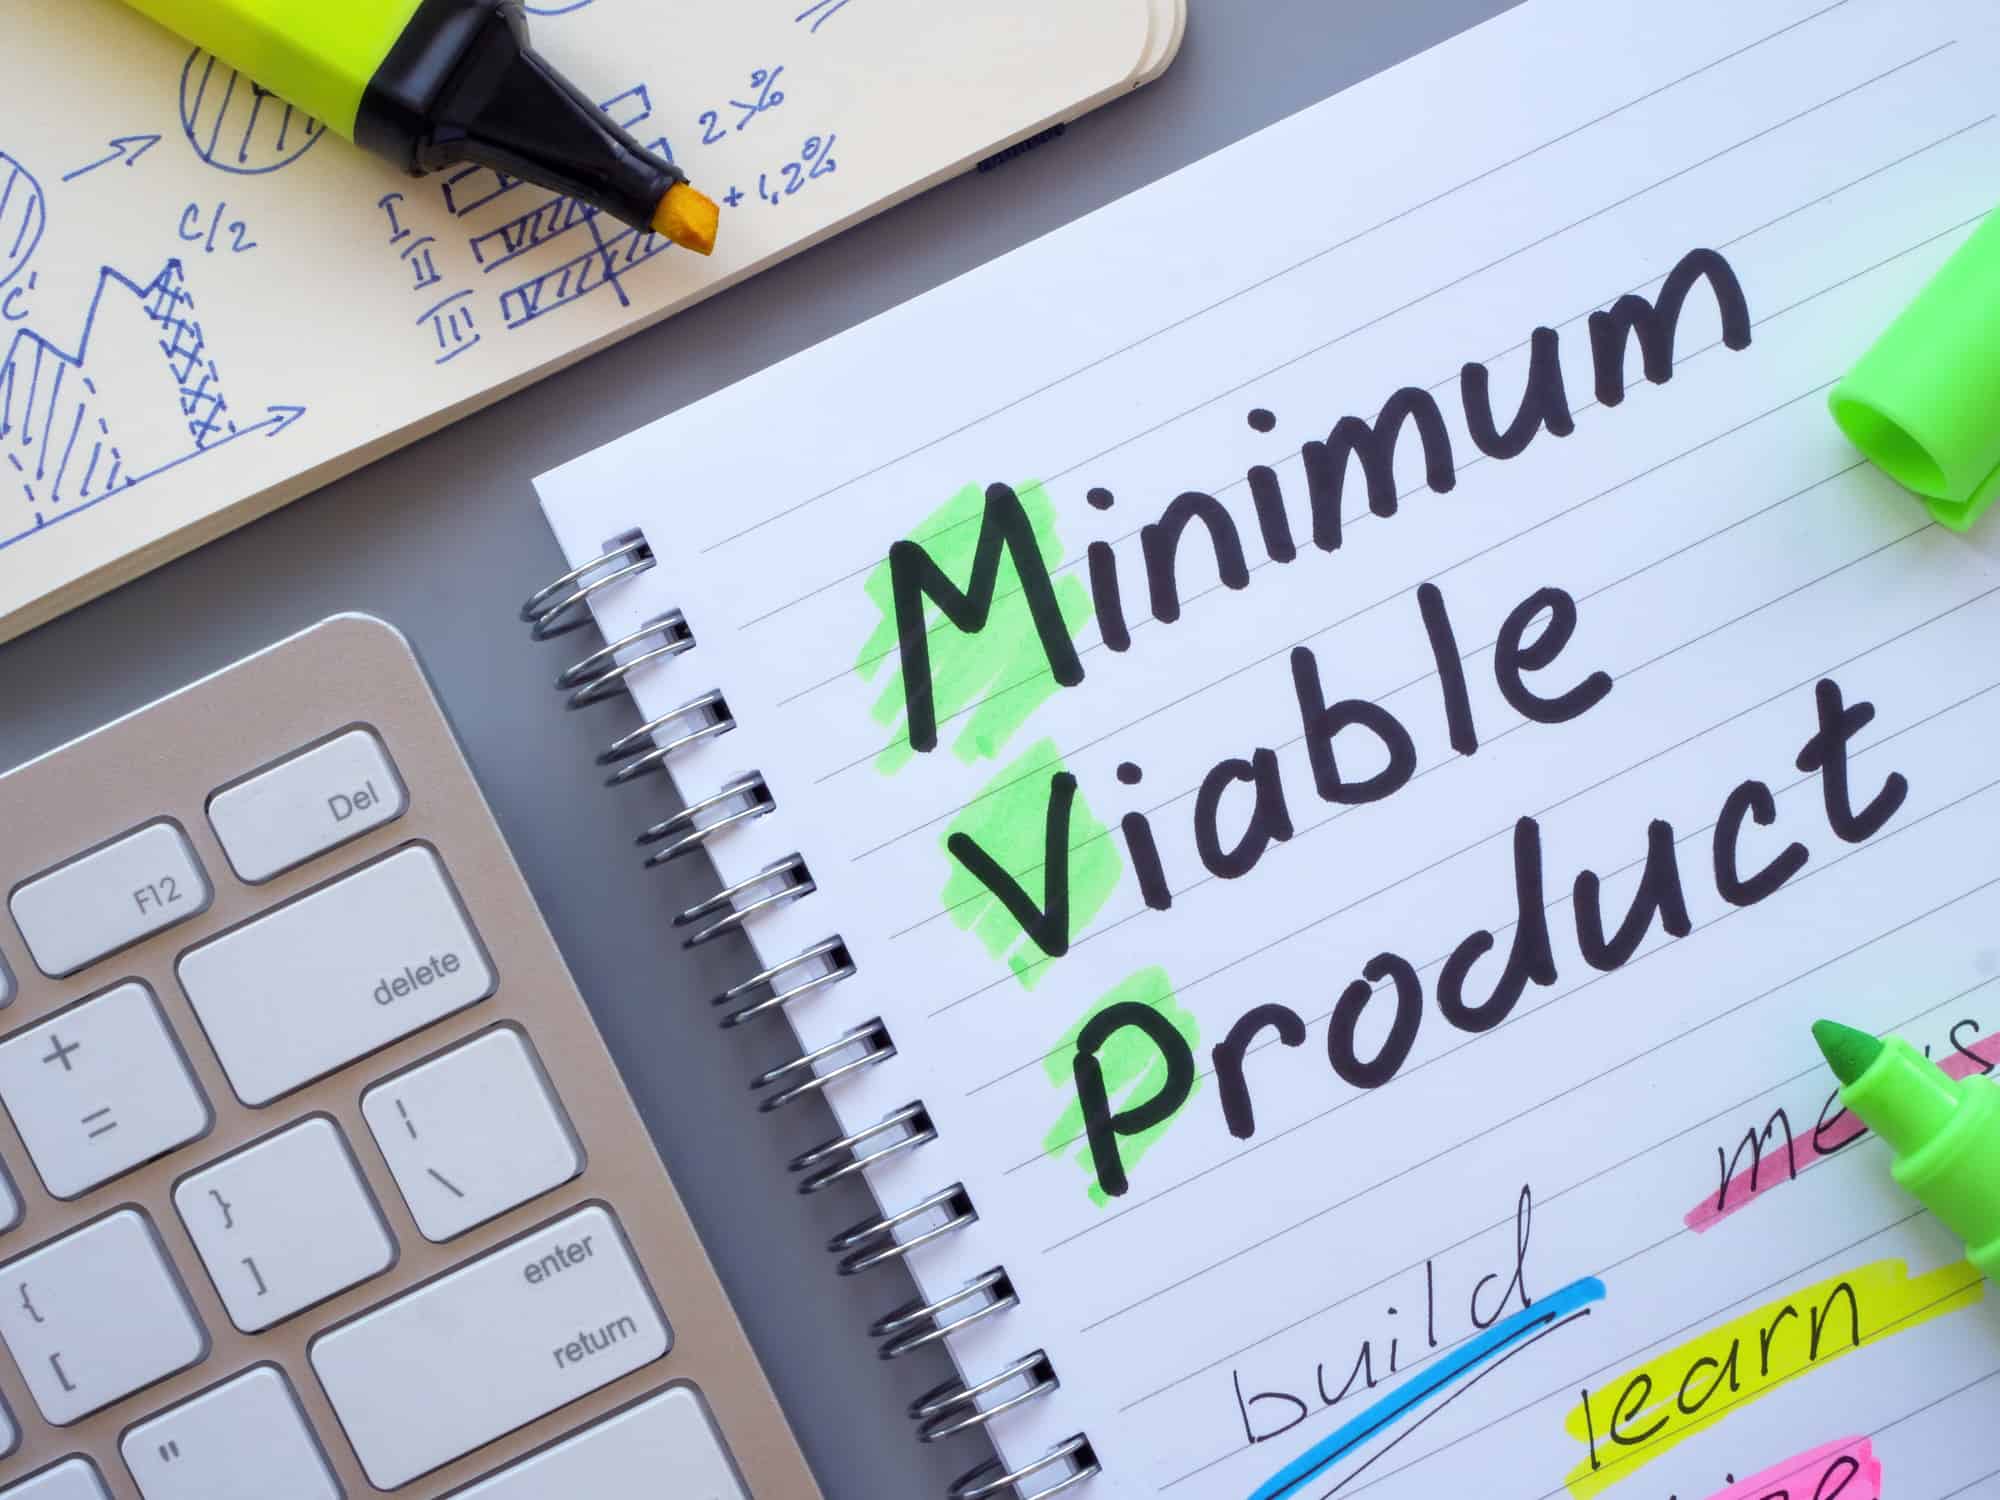 MVP Minimum viable product.